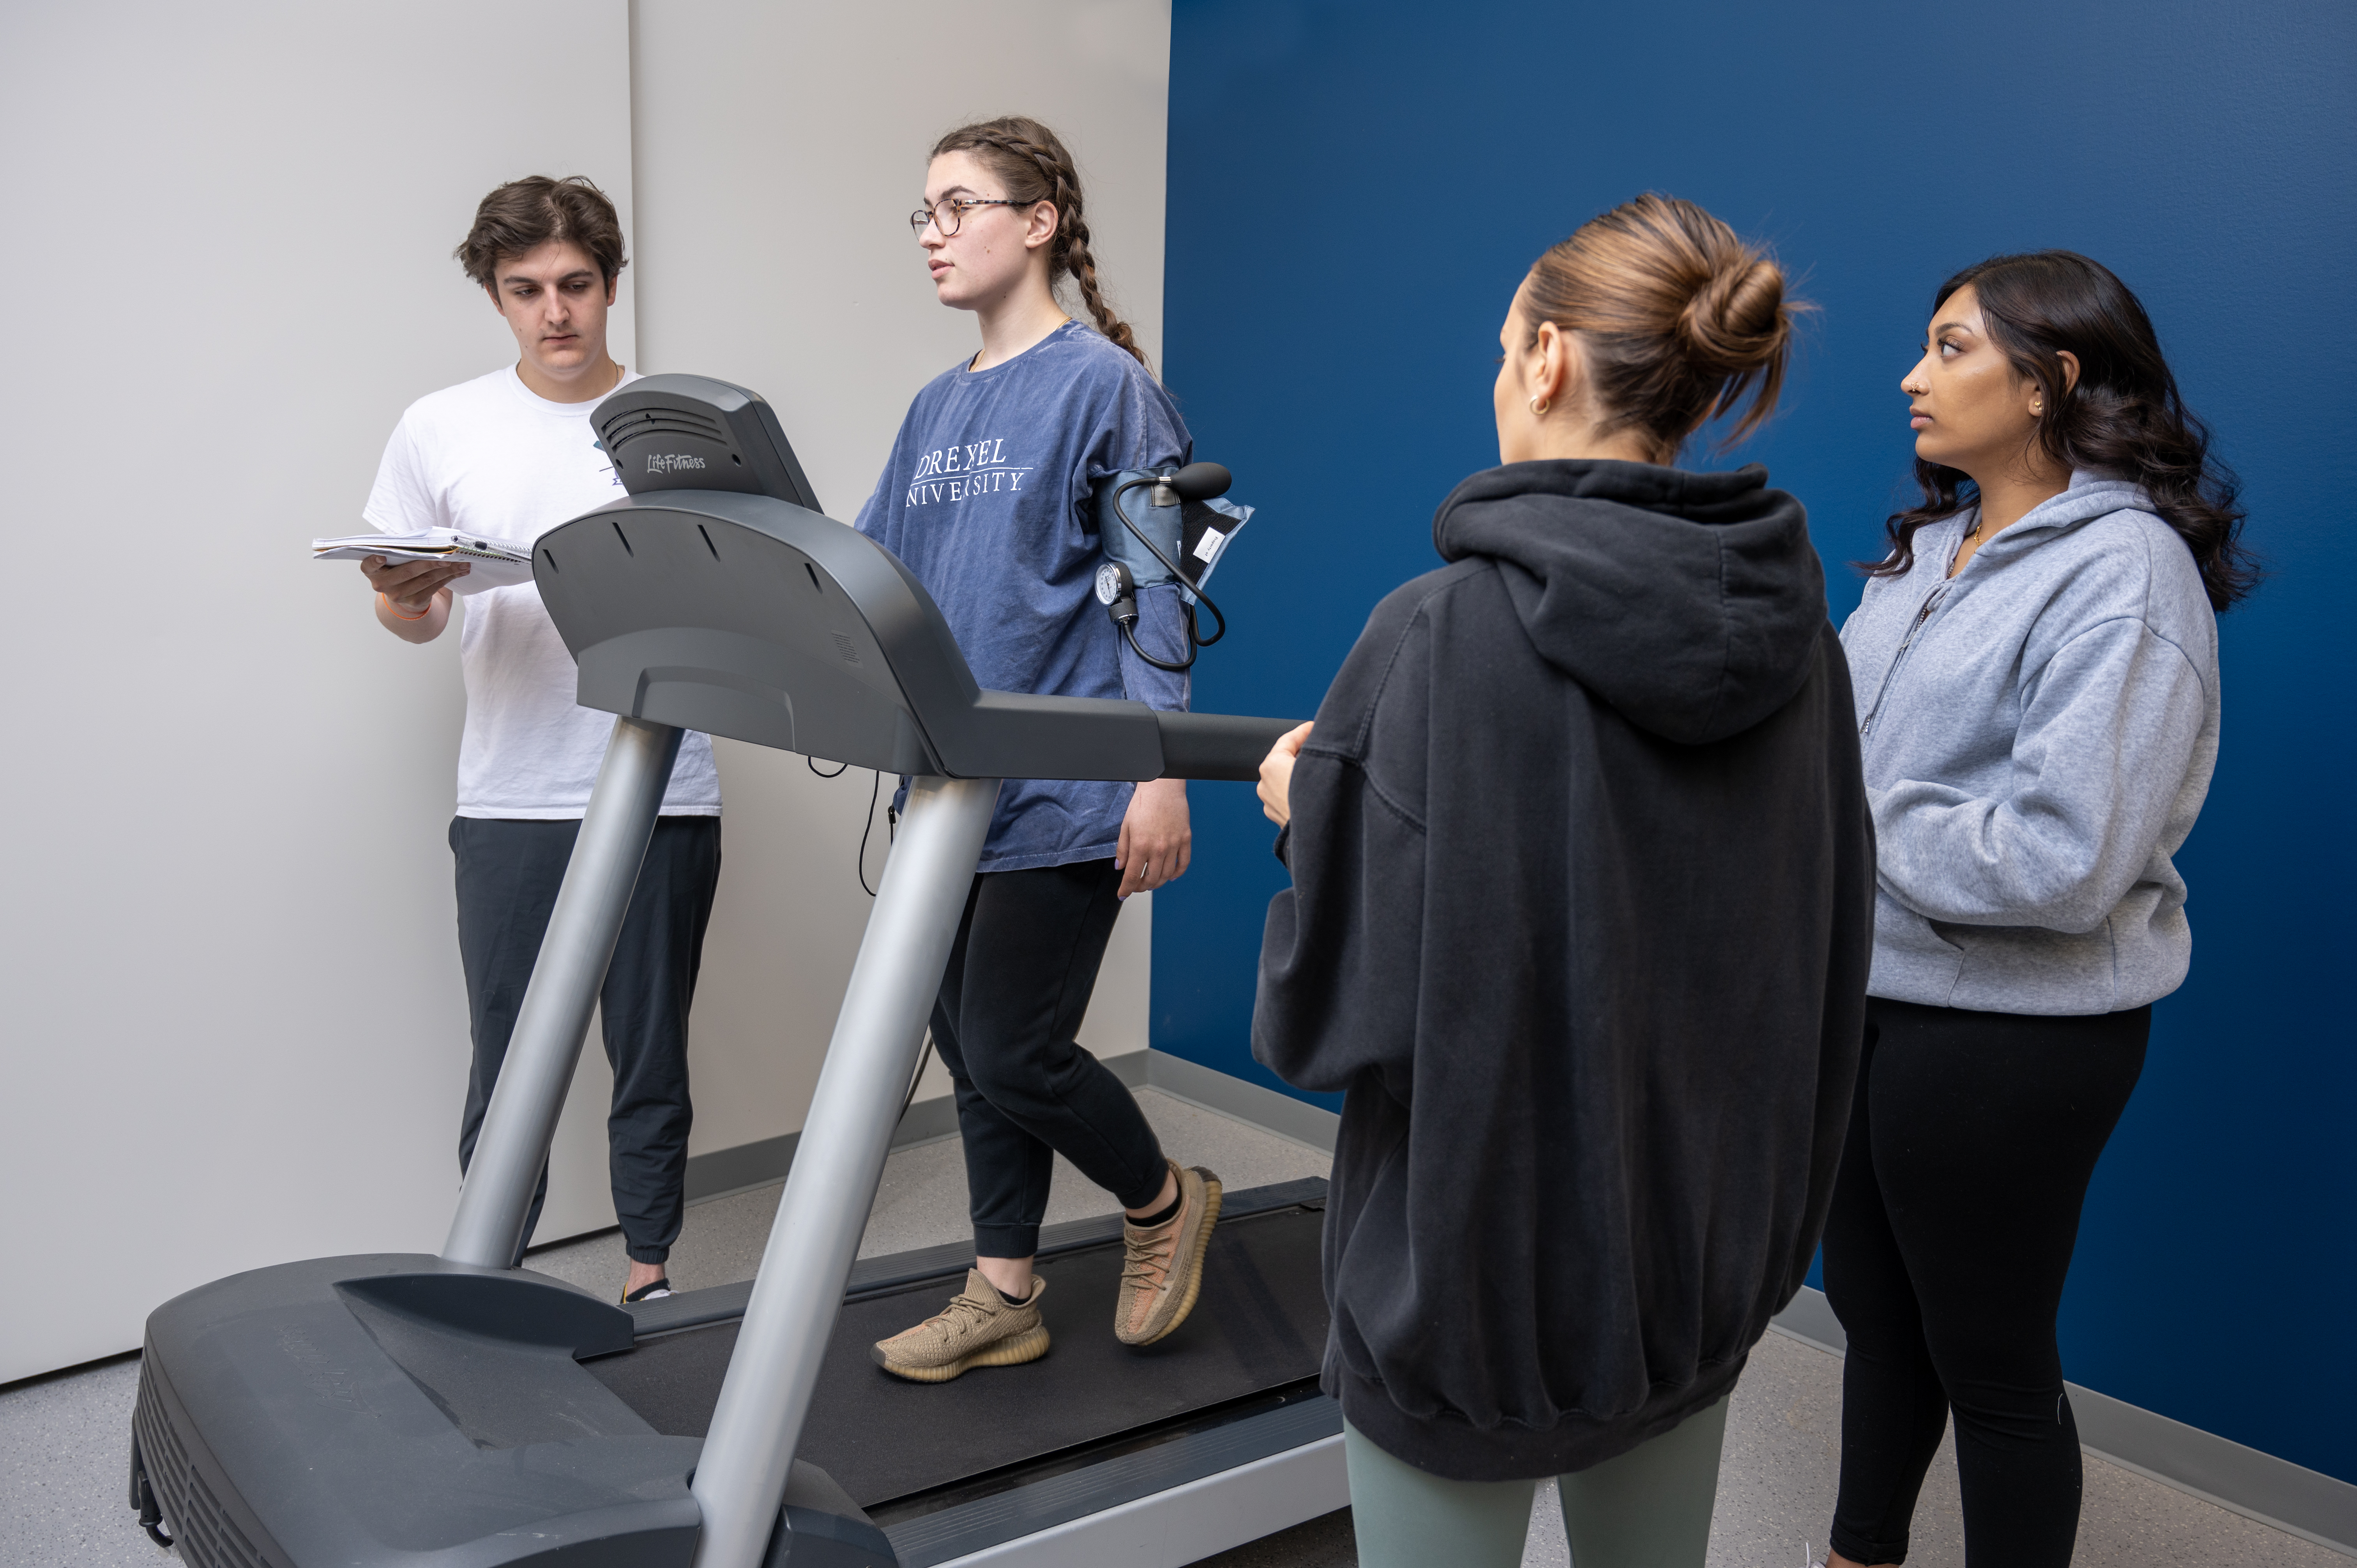 students observe student on treadmill